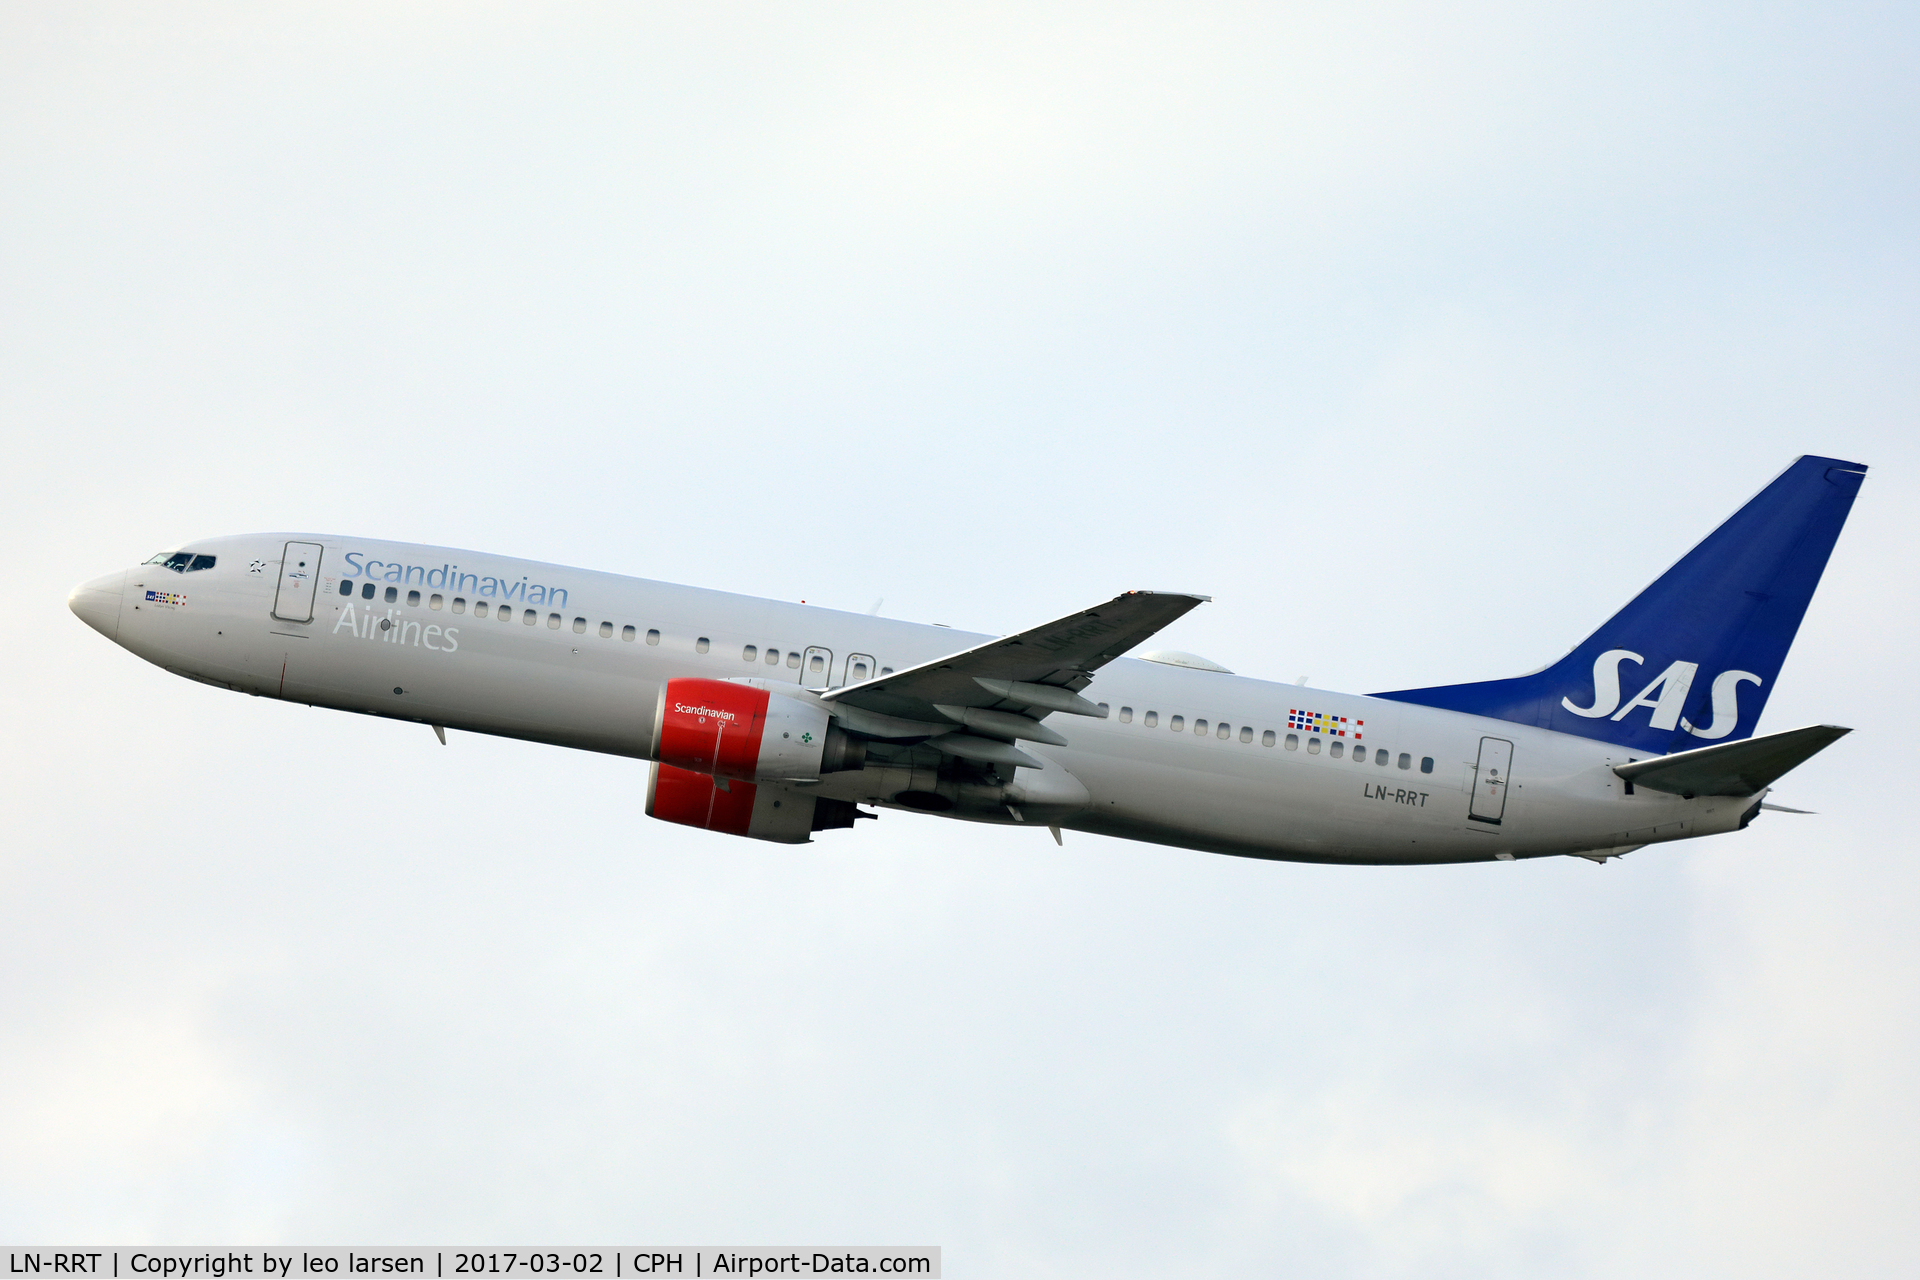 LN-RRT, 2001 Boeing 737-883 C/N 28326, Copenhagen 2.3.2017